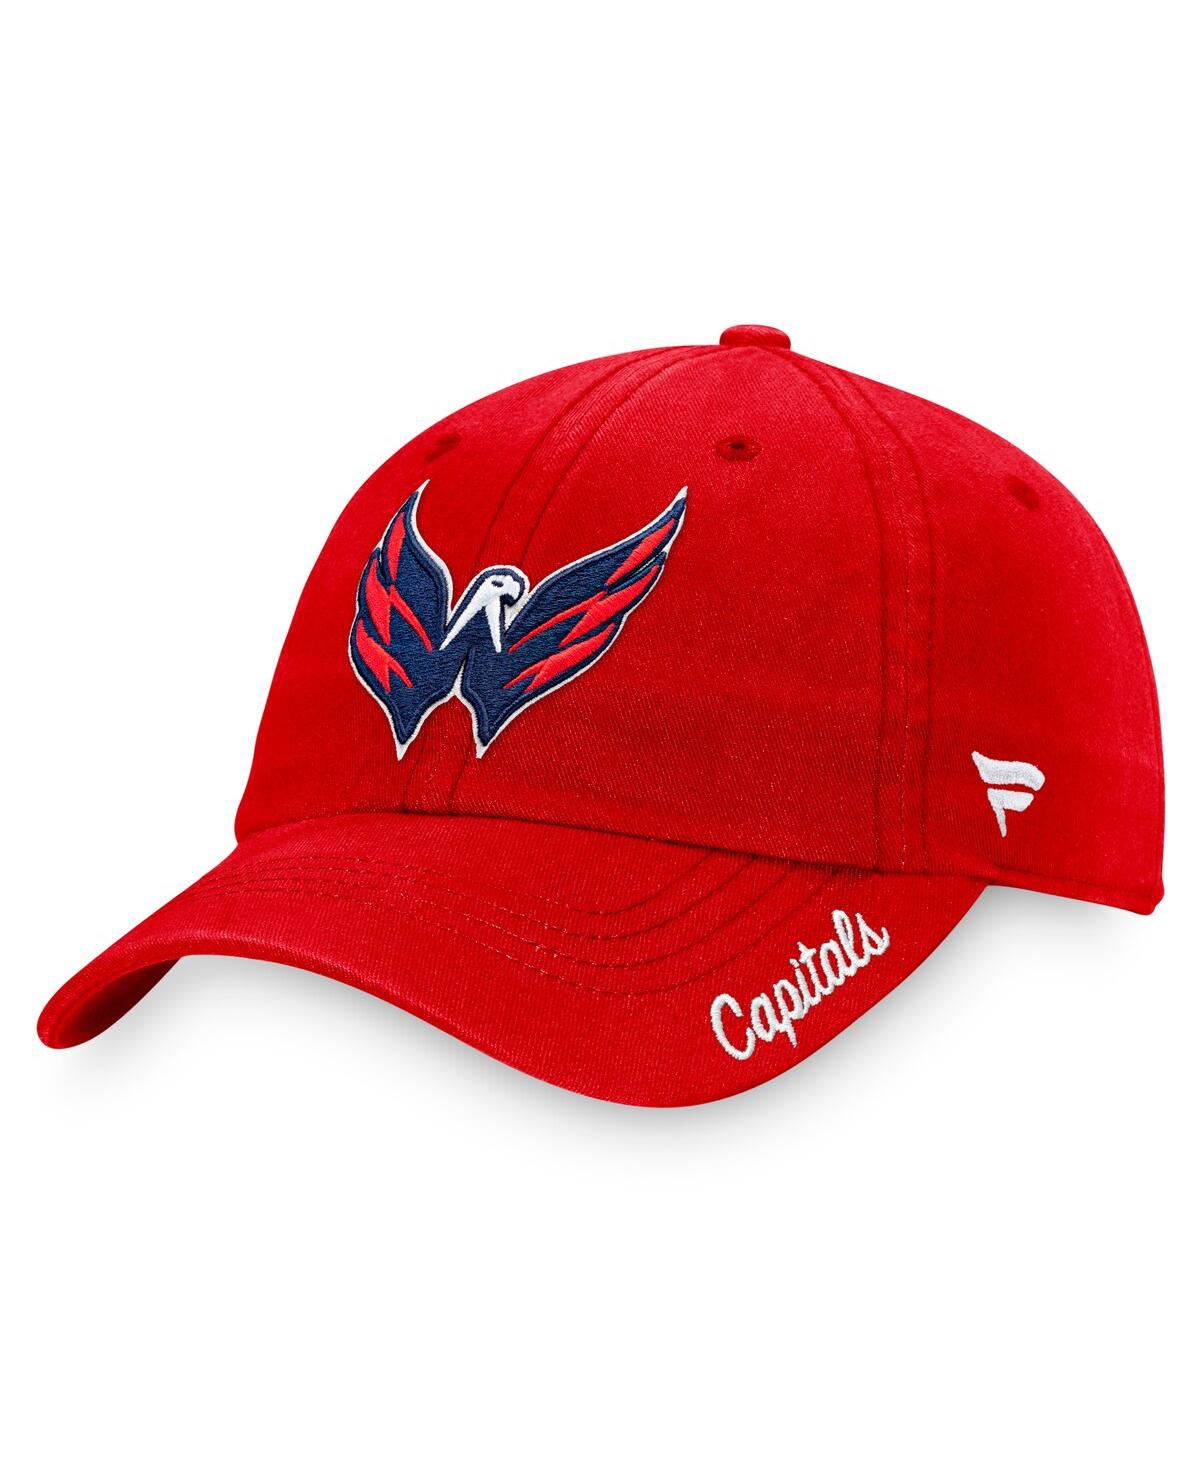 Fanatics Women's  Red Washington Capitals Primary Logo Adjustable Hat